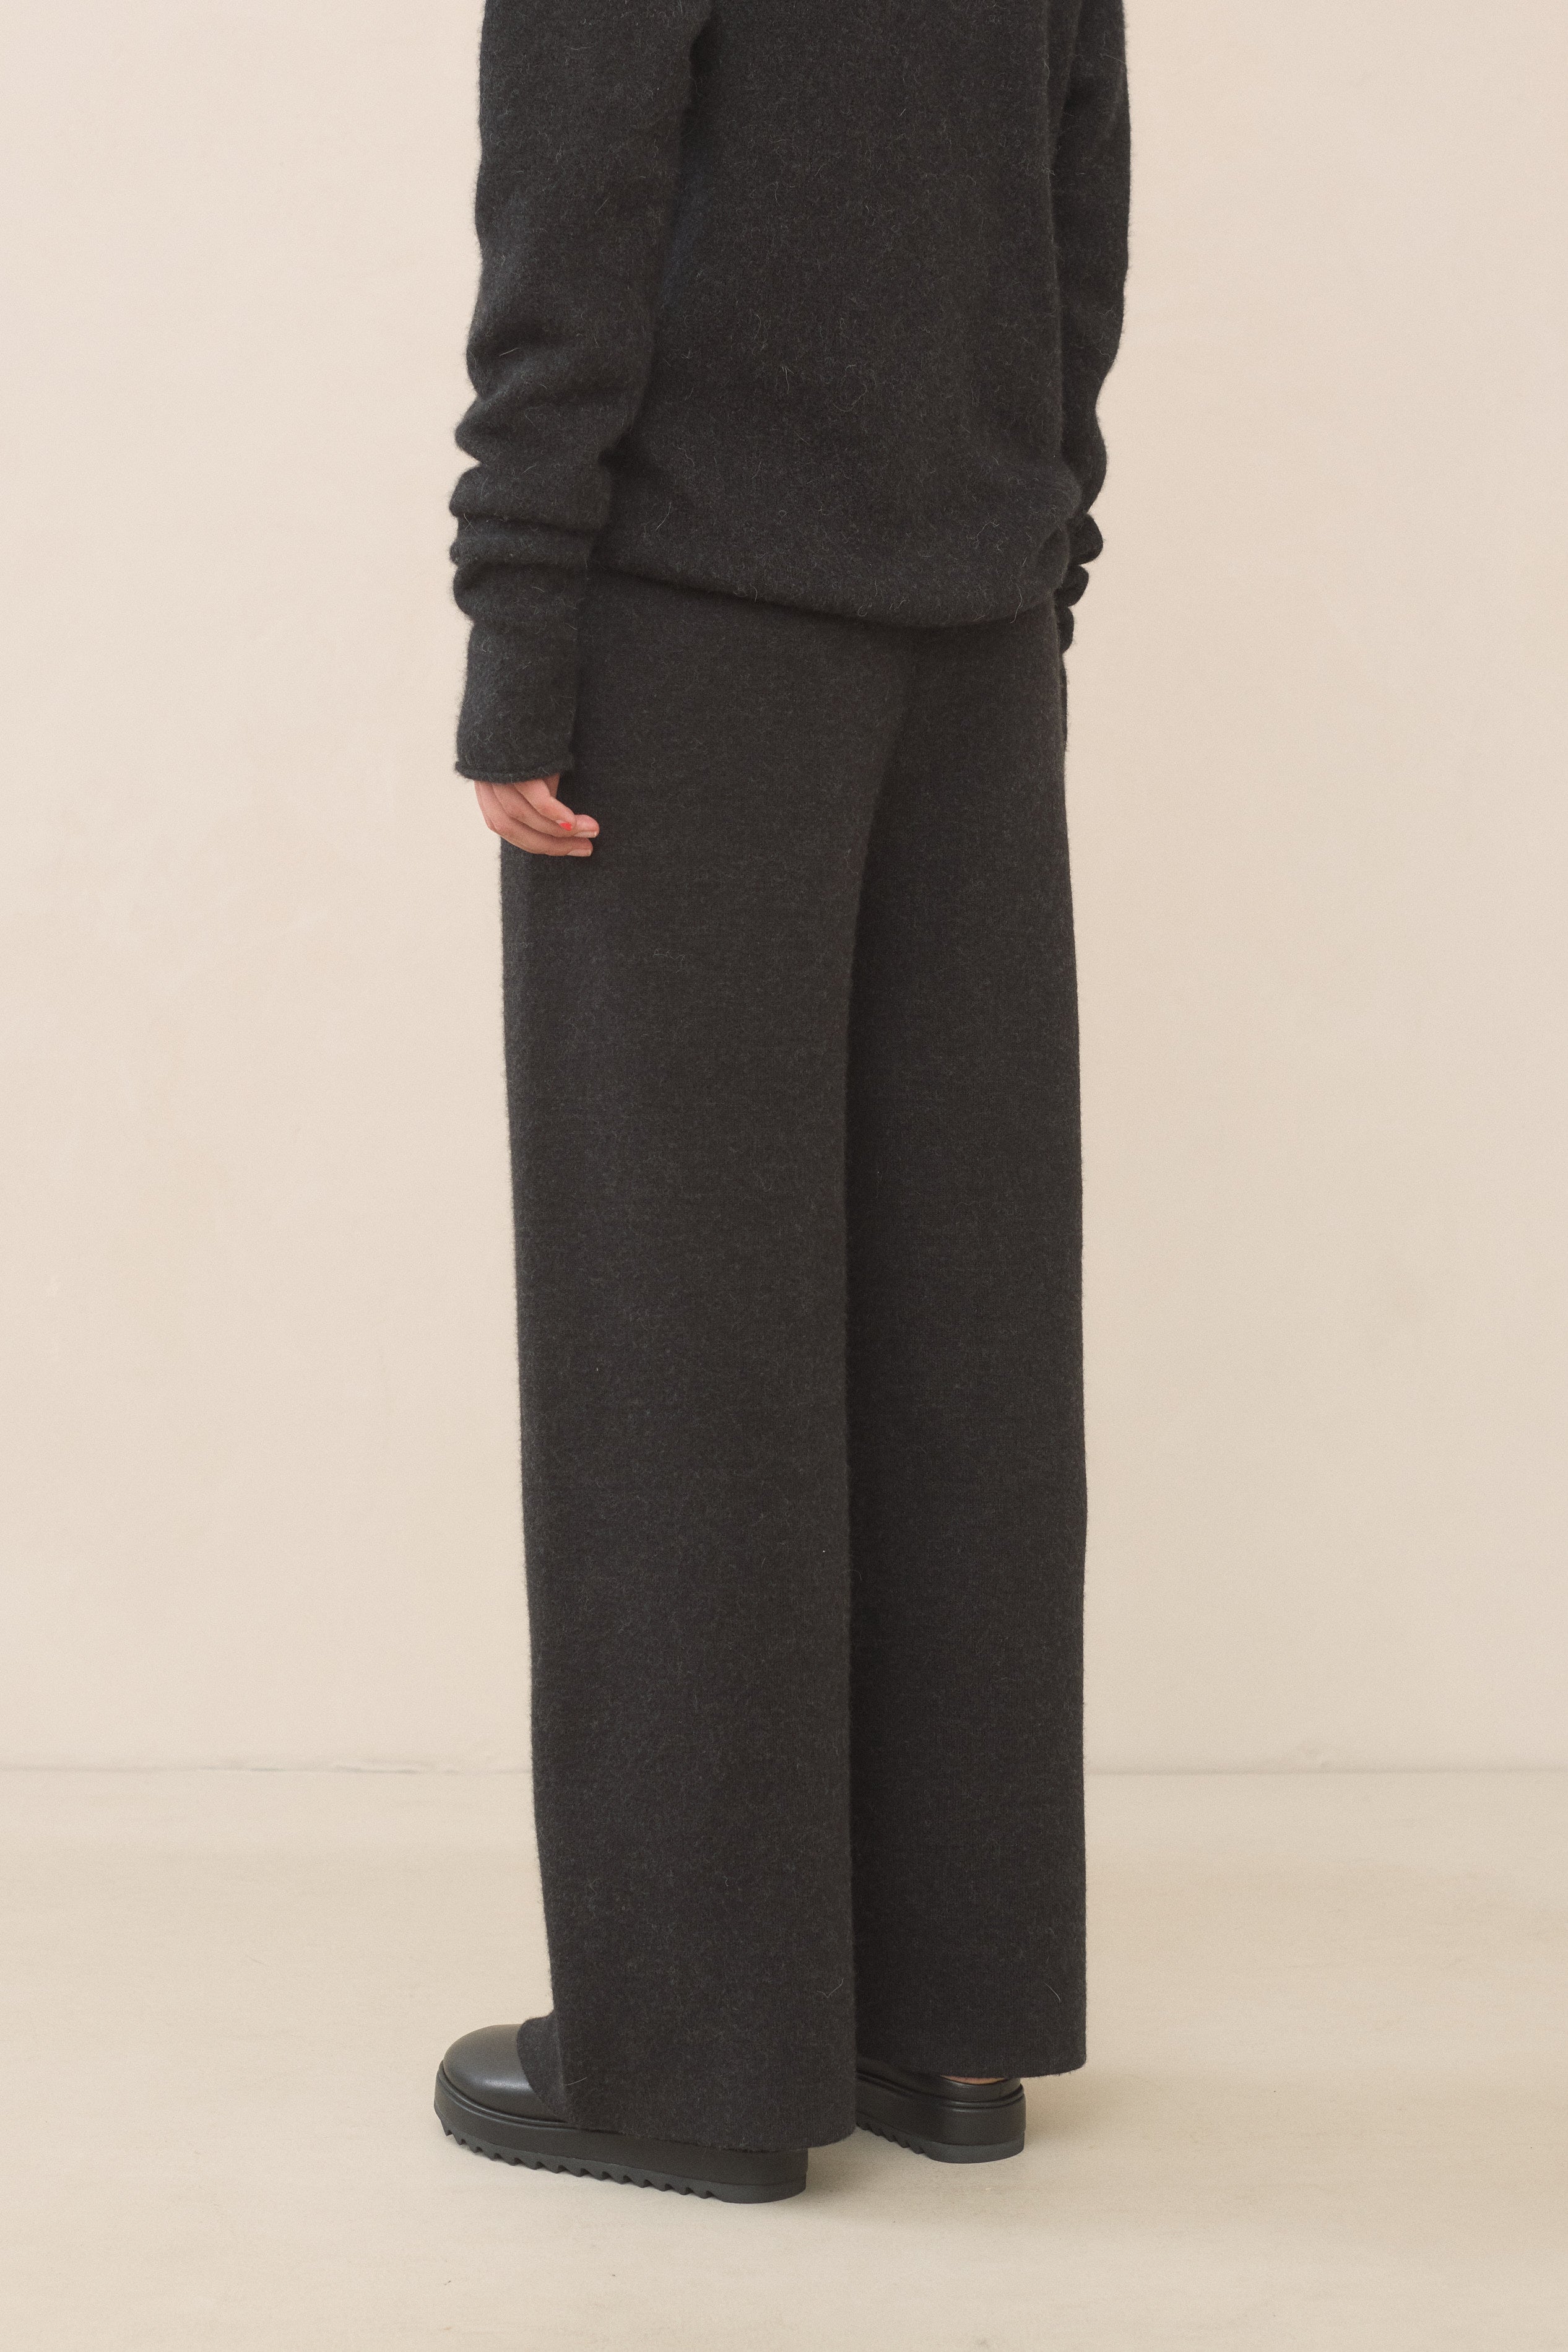 Kobi Halperin Alexandra Double-Knit Pants | Neiman Marcus